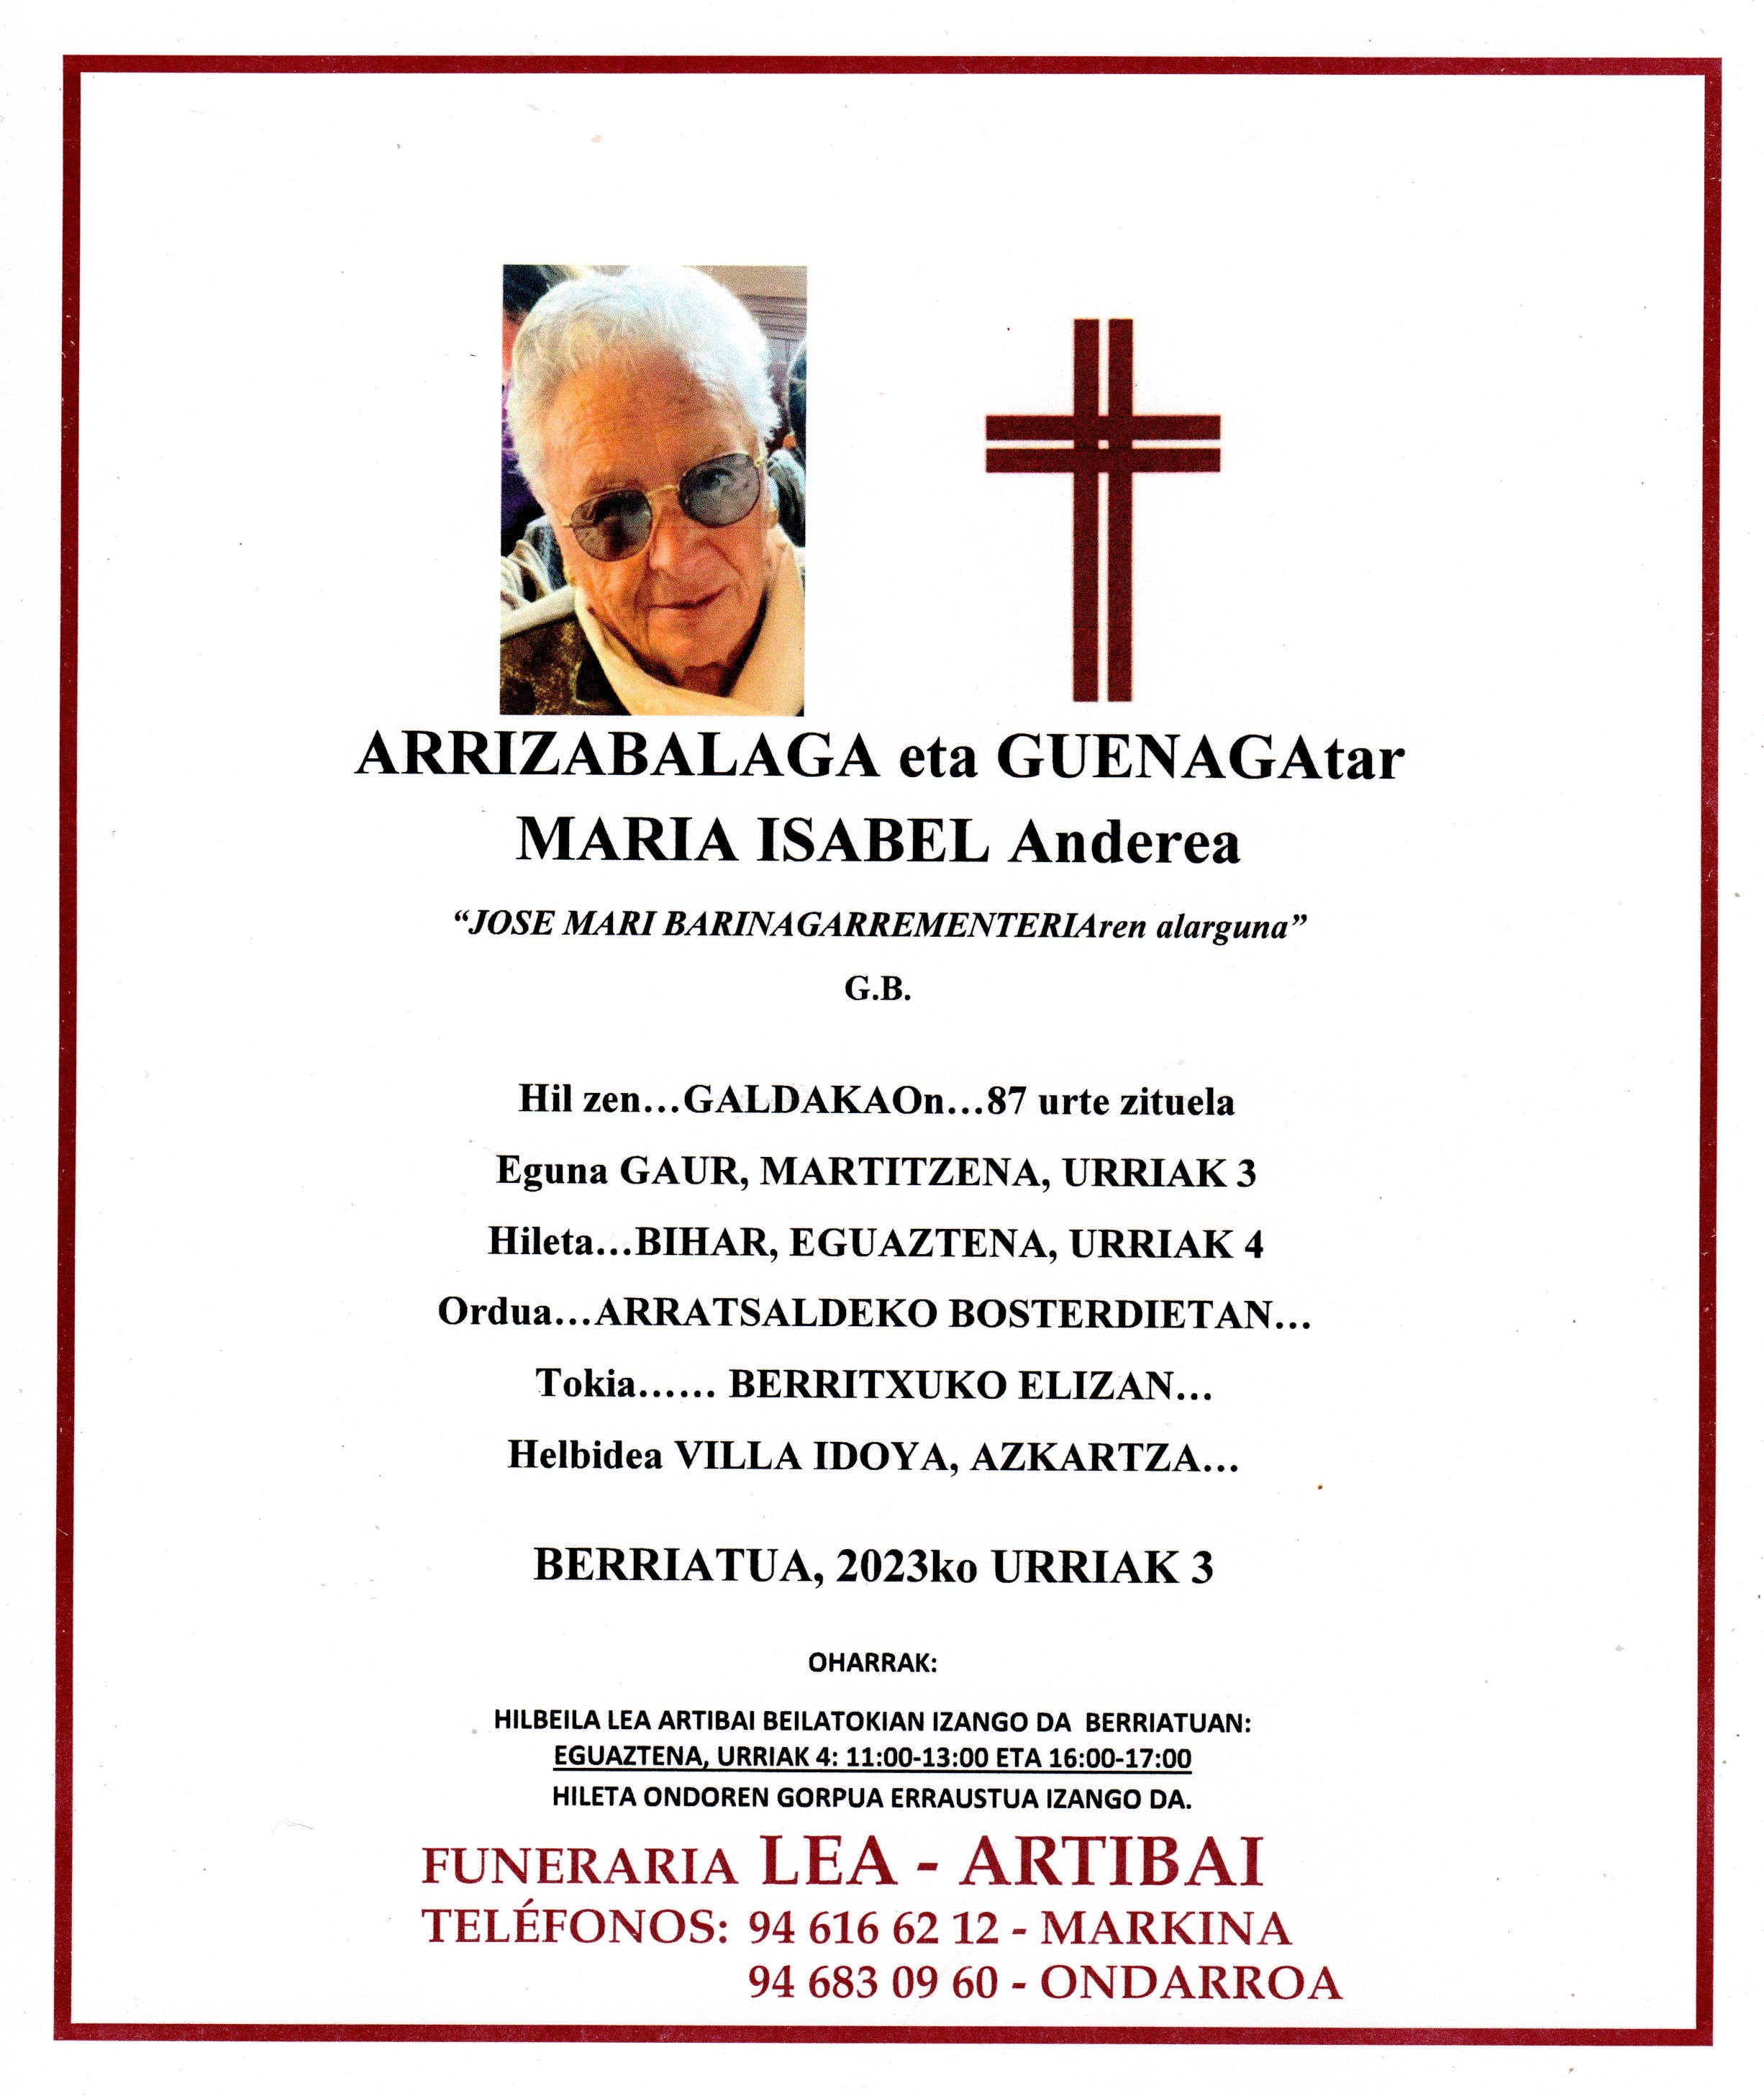 Maria Isabel Arrizabalaga Guenaga